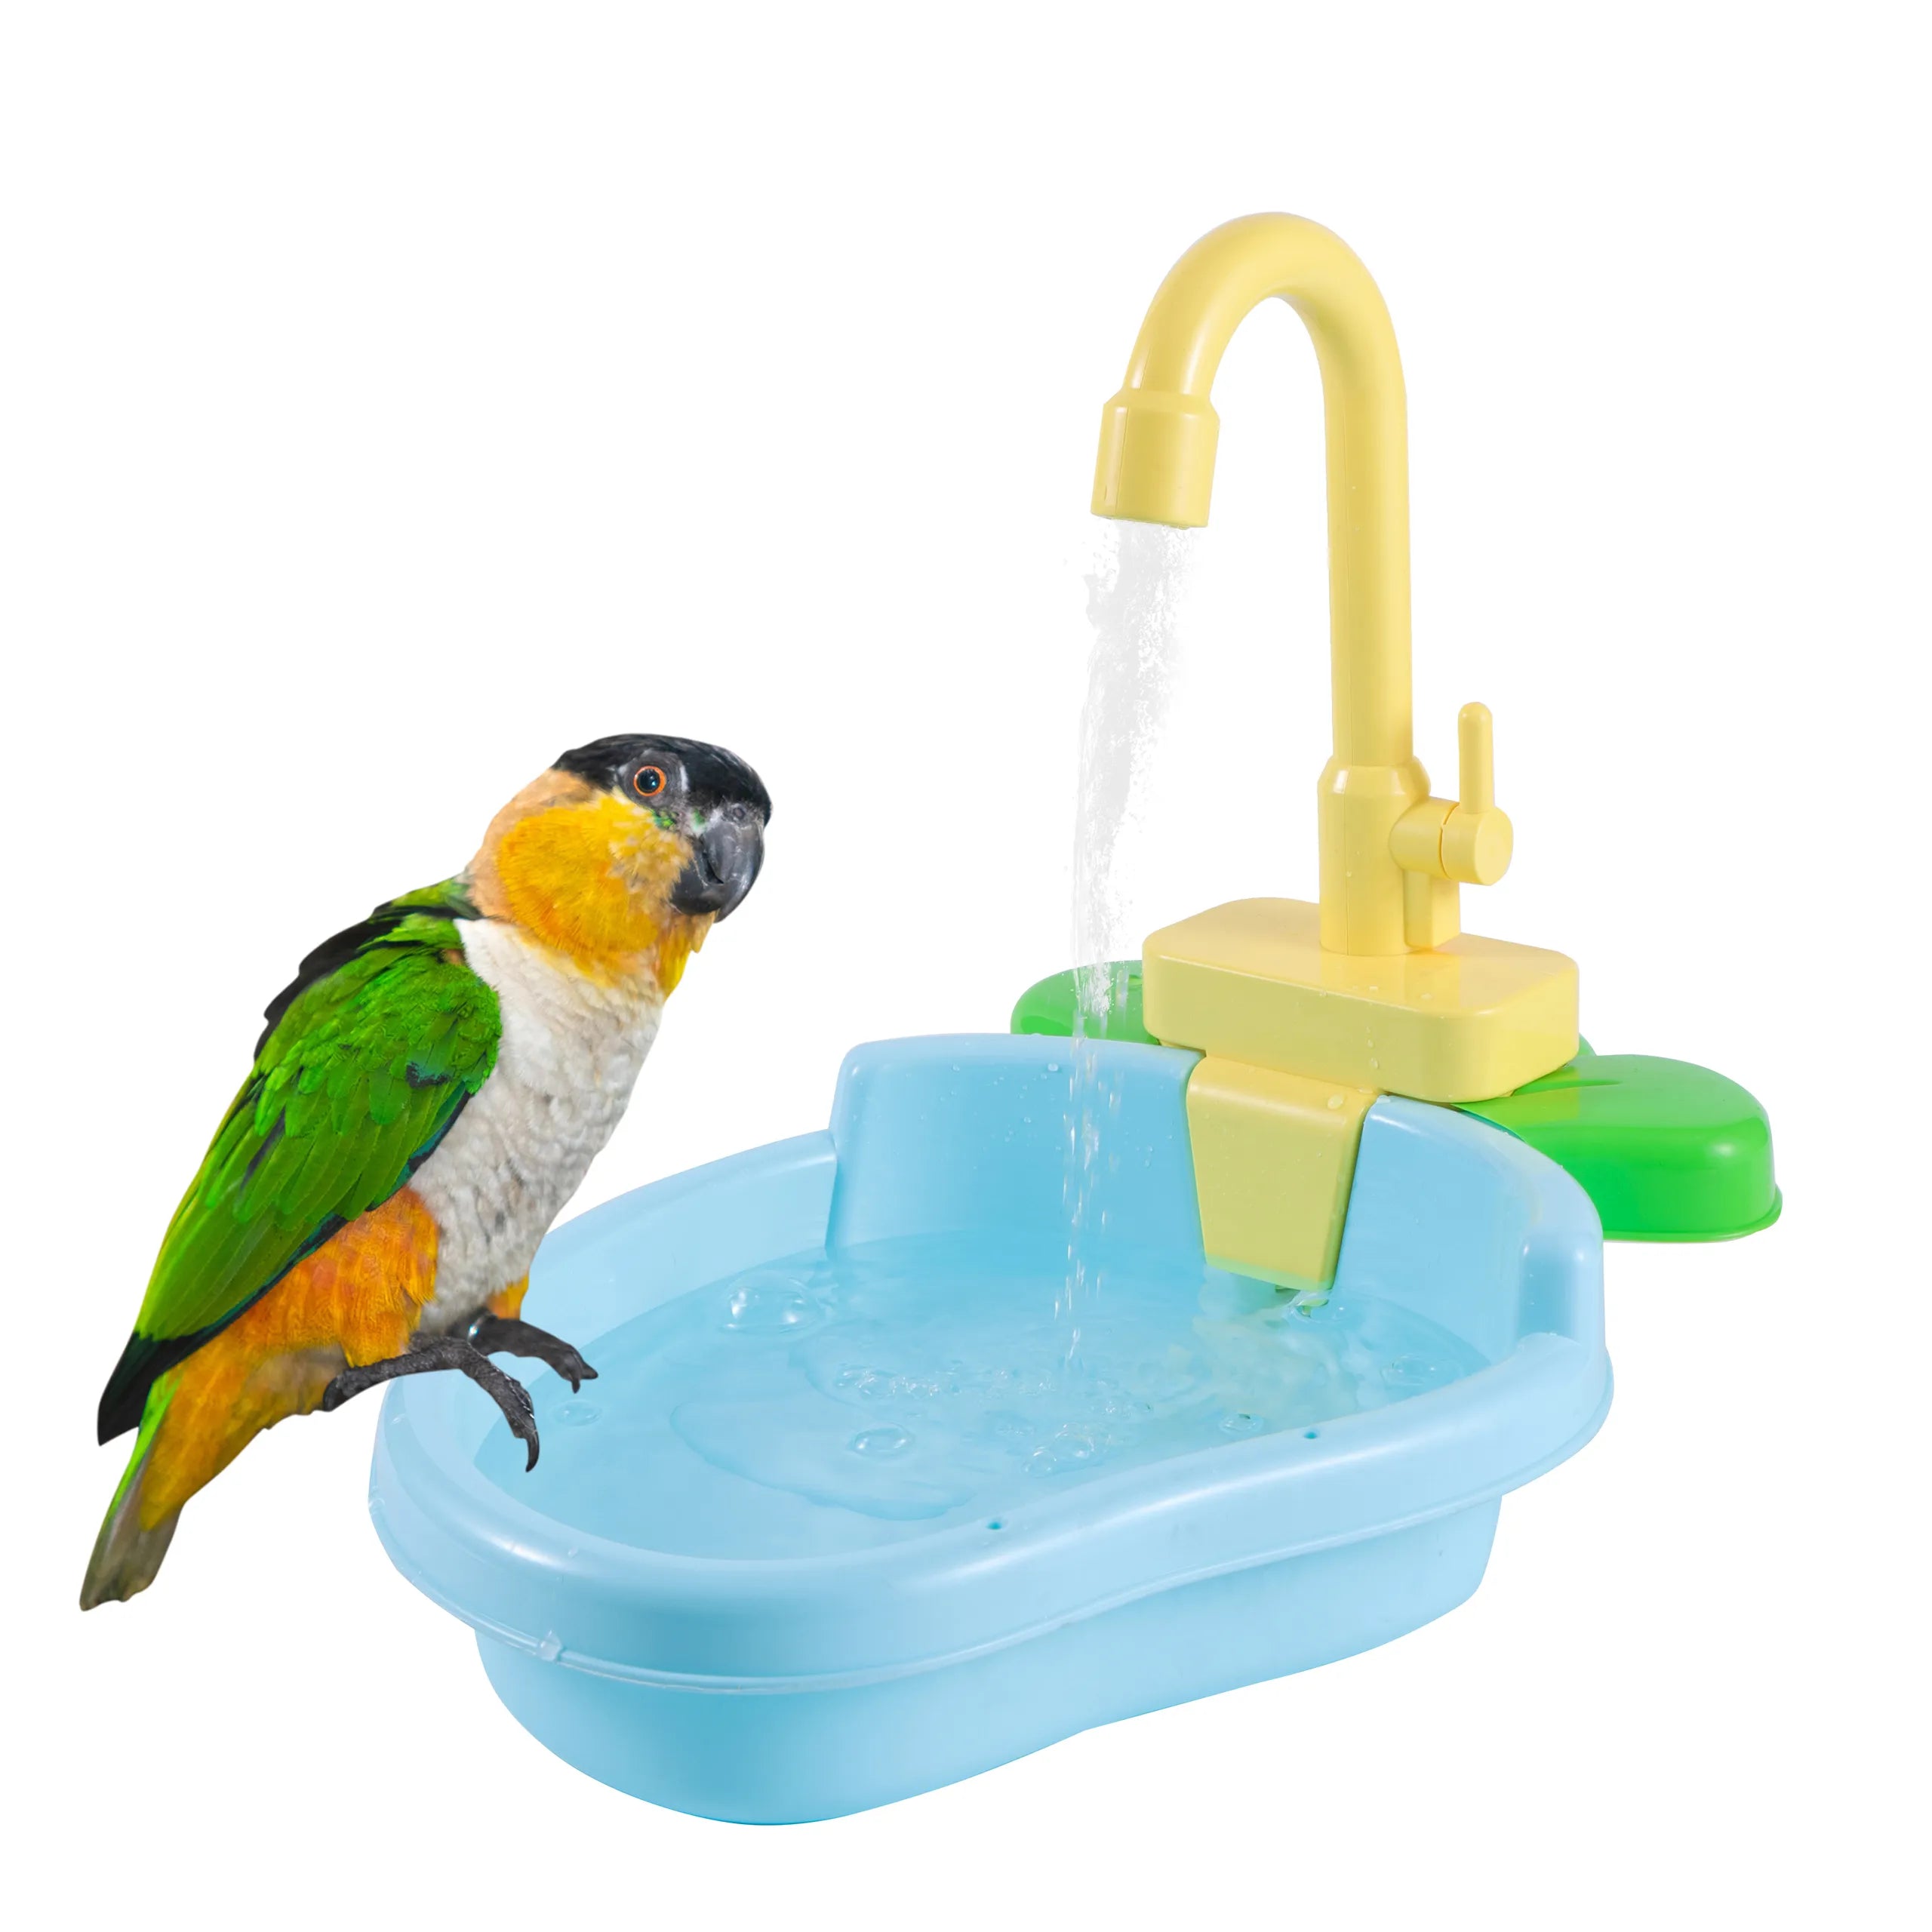 Parrot Perch Shower Bird Bath Basin & Toy - Healthy Bird Bathing  petlums.com   